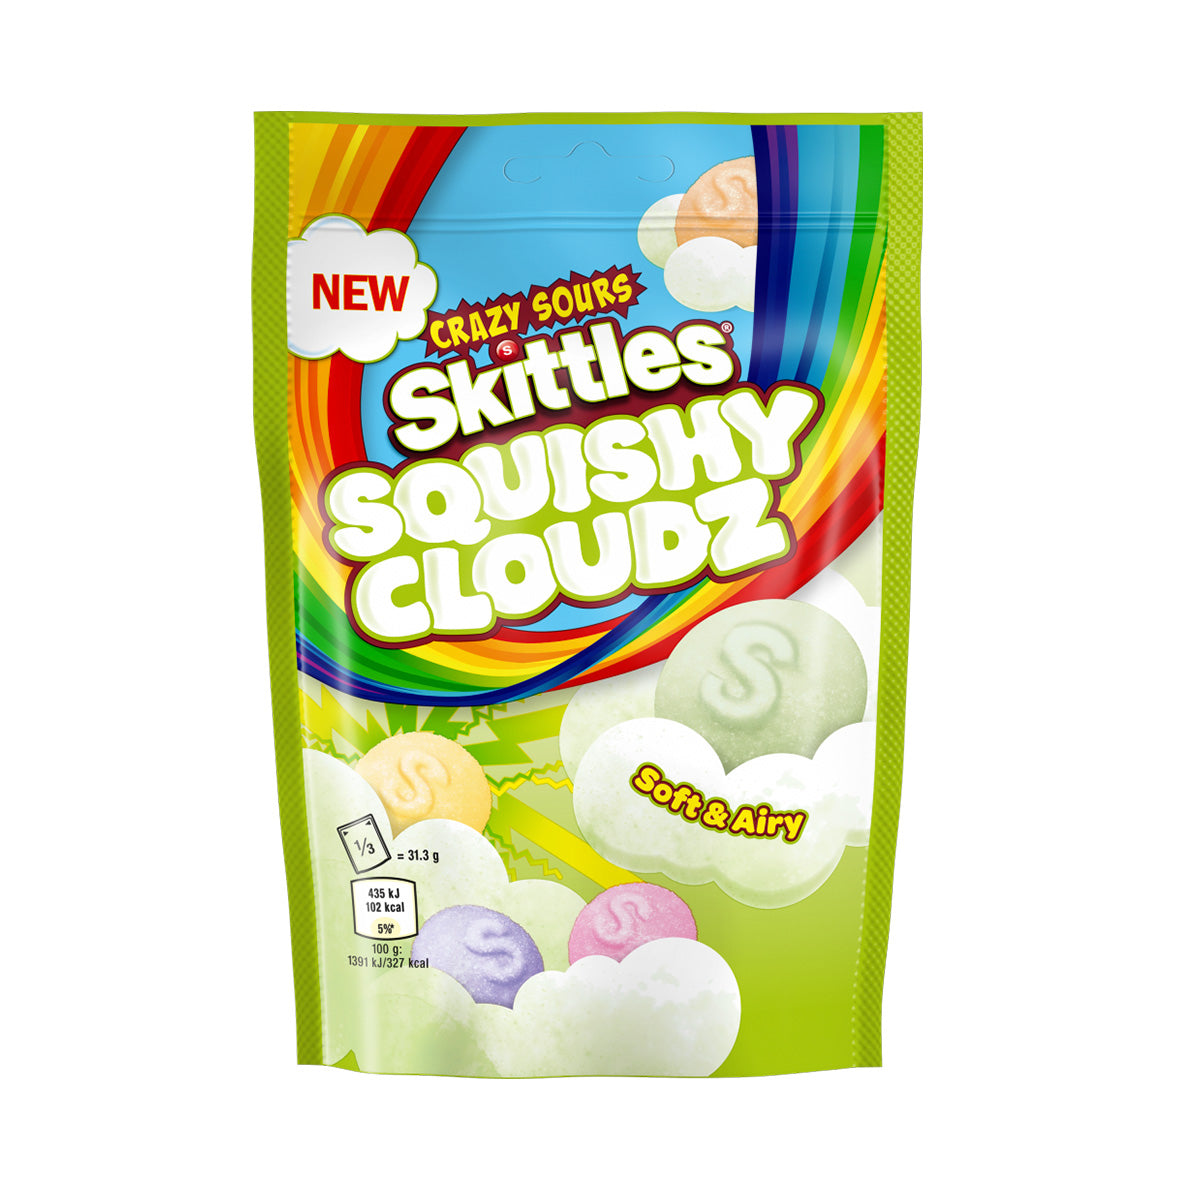 Skittles Squishy Cloudz Crazy Sours 94g-Skittles-SNACK SHOP AUSTRIA